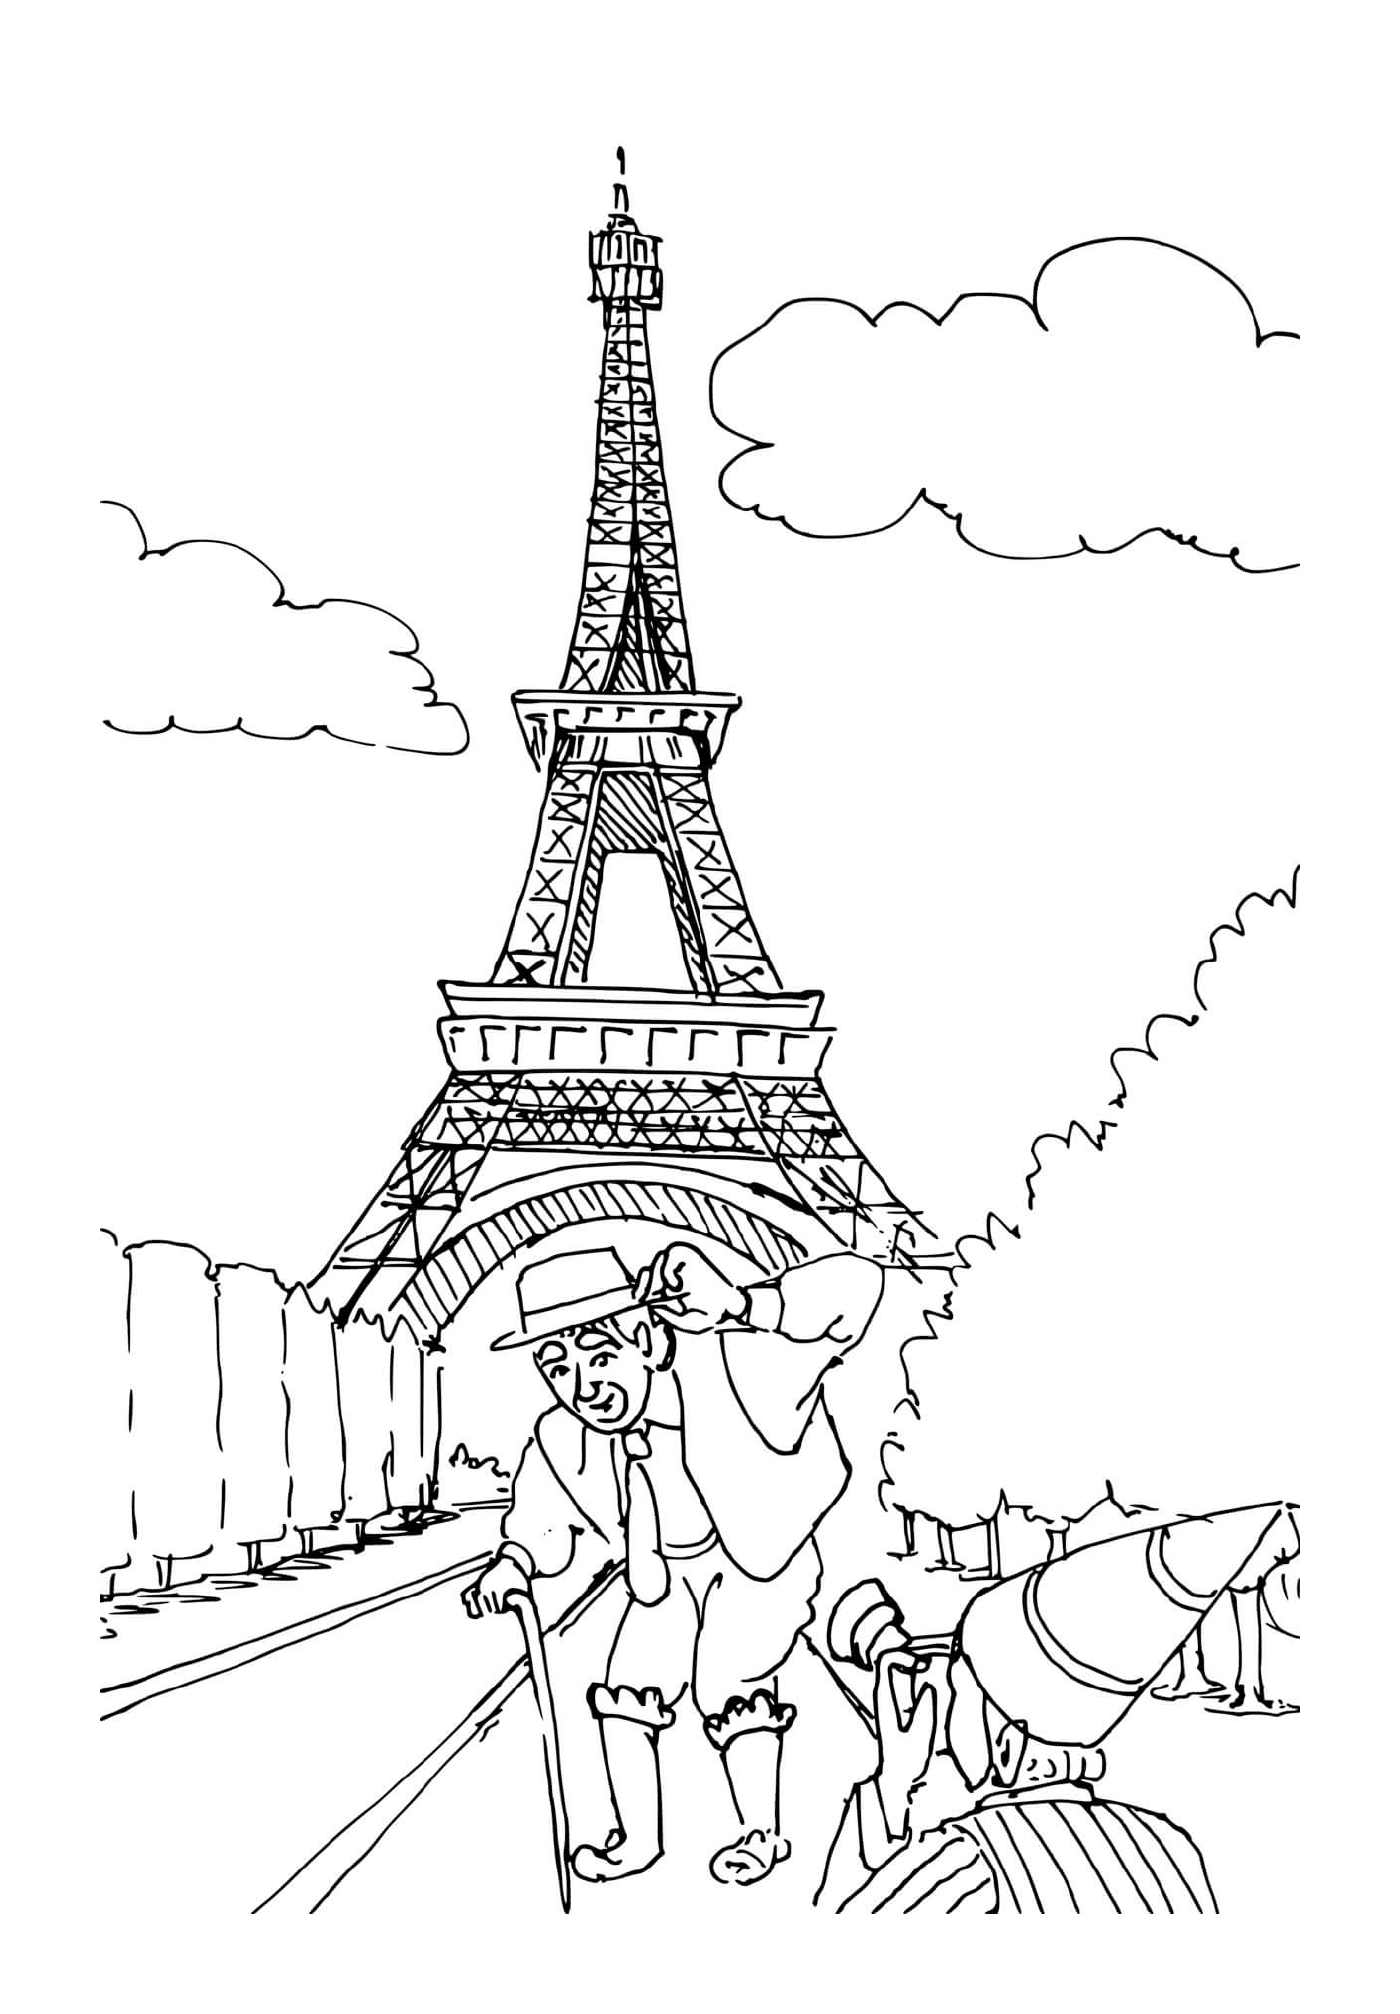  Tourist vor dem Eiffelturm 